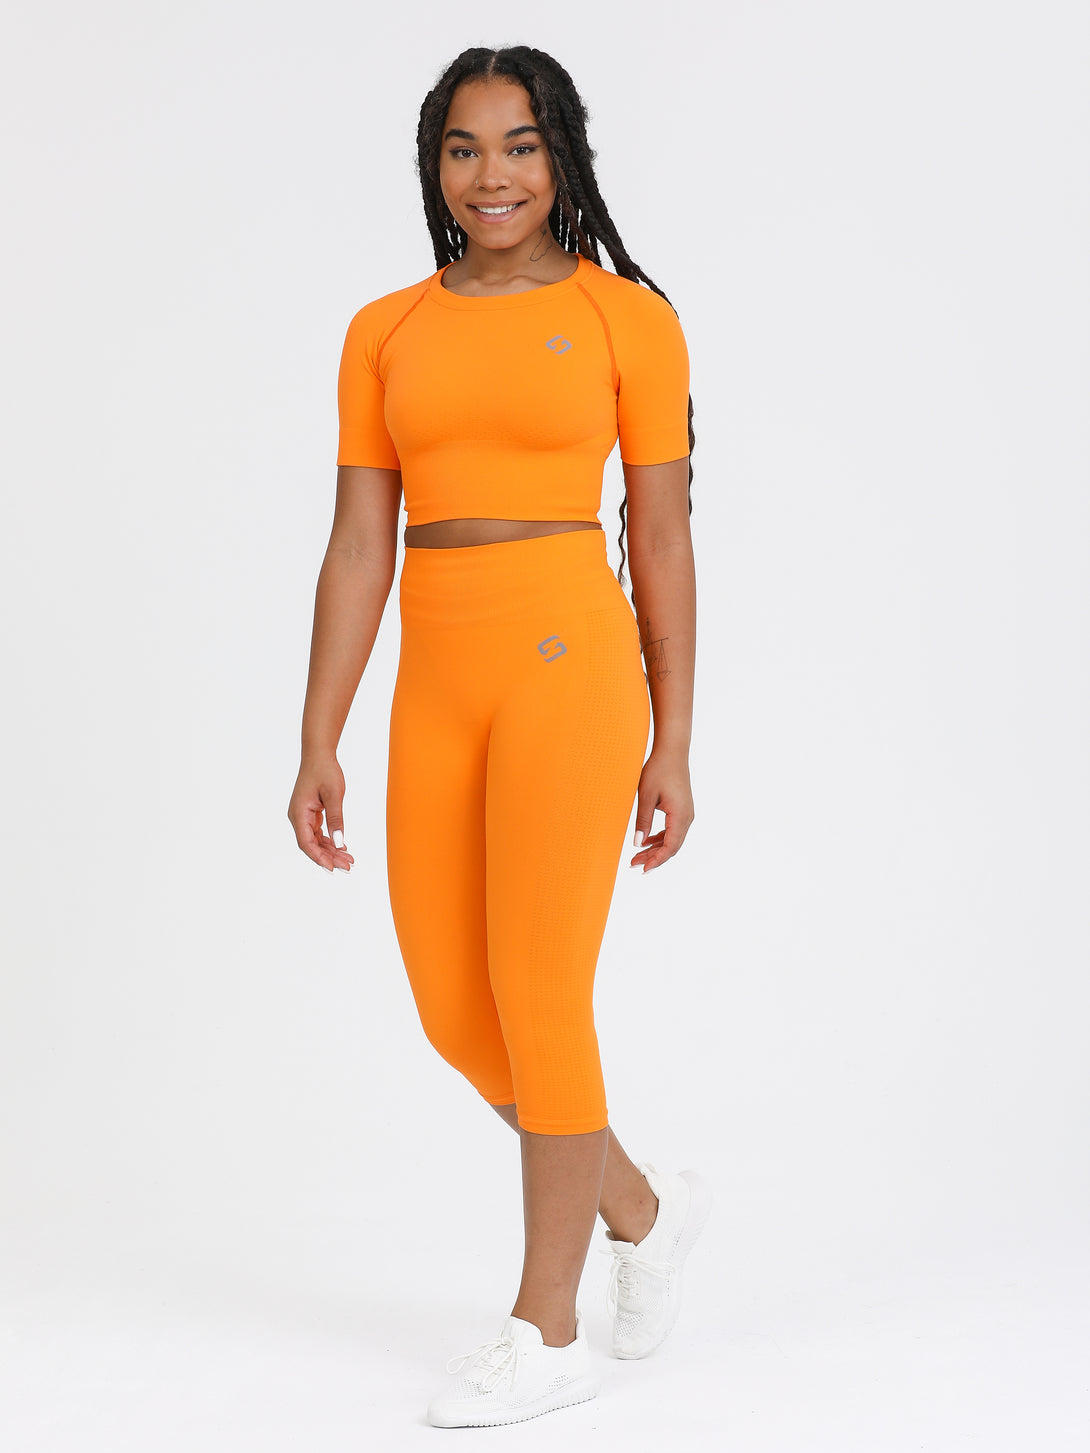 A Woman Wearing Orange Color Seamless Capri Legging